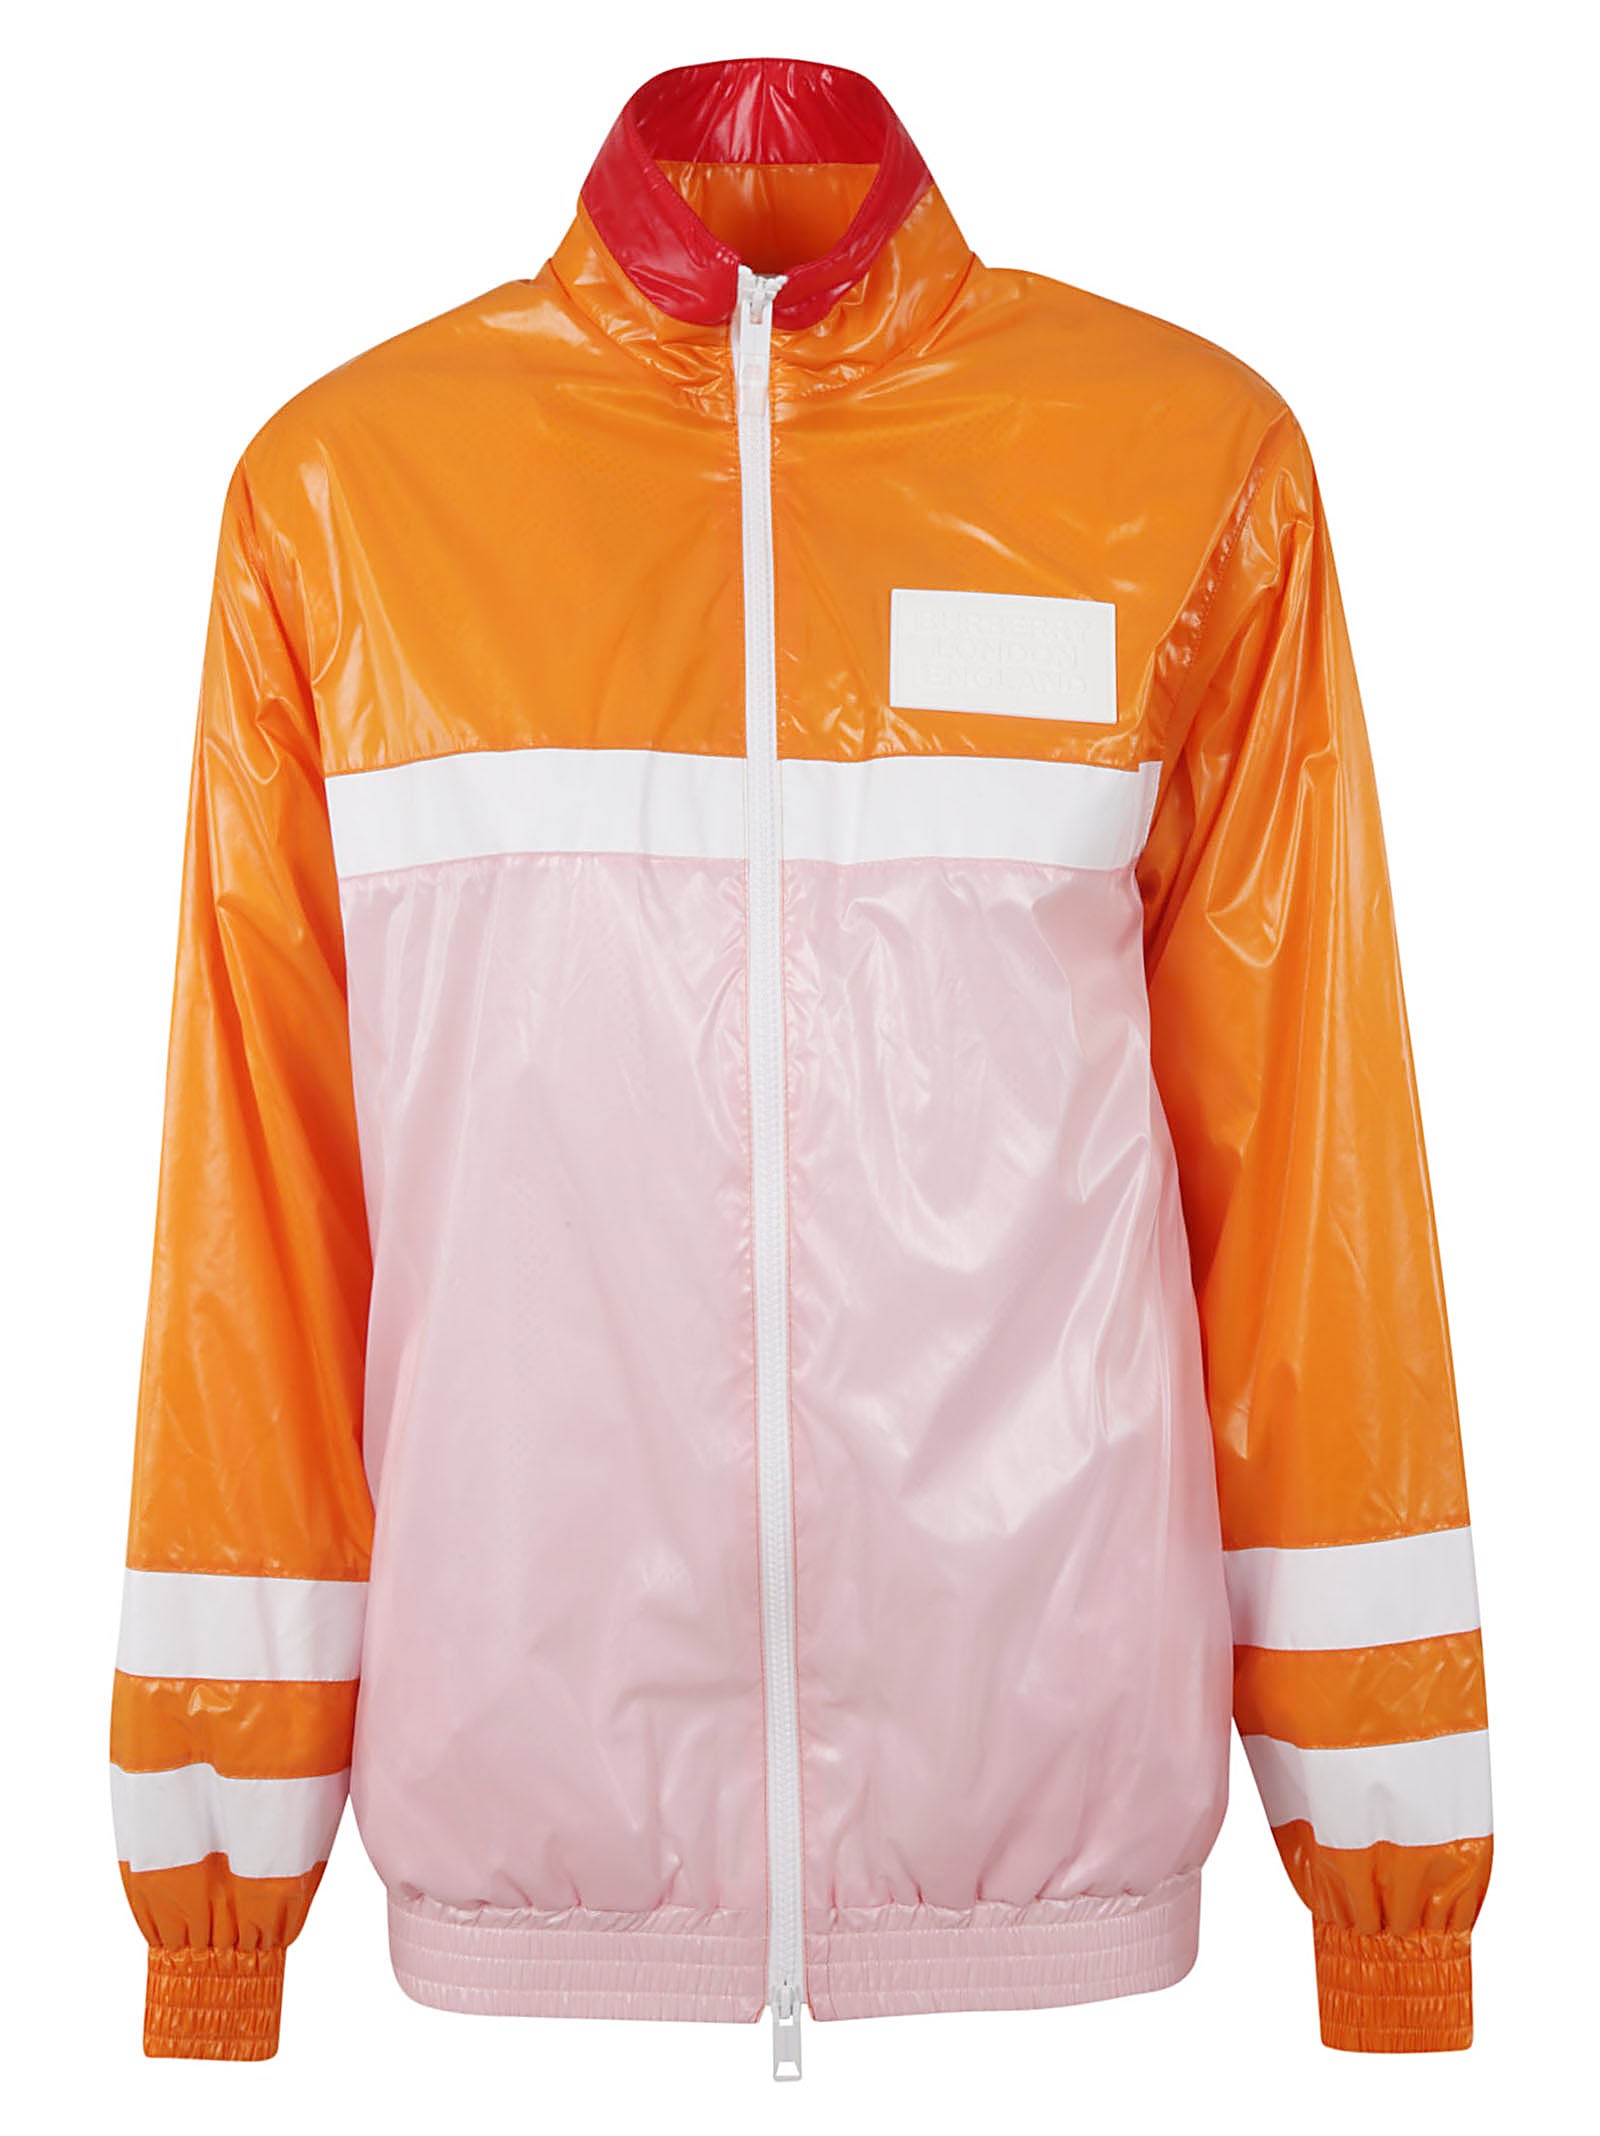 burberry jacket orange